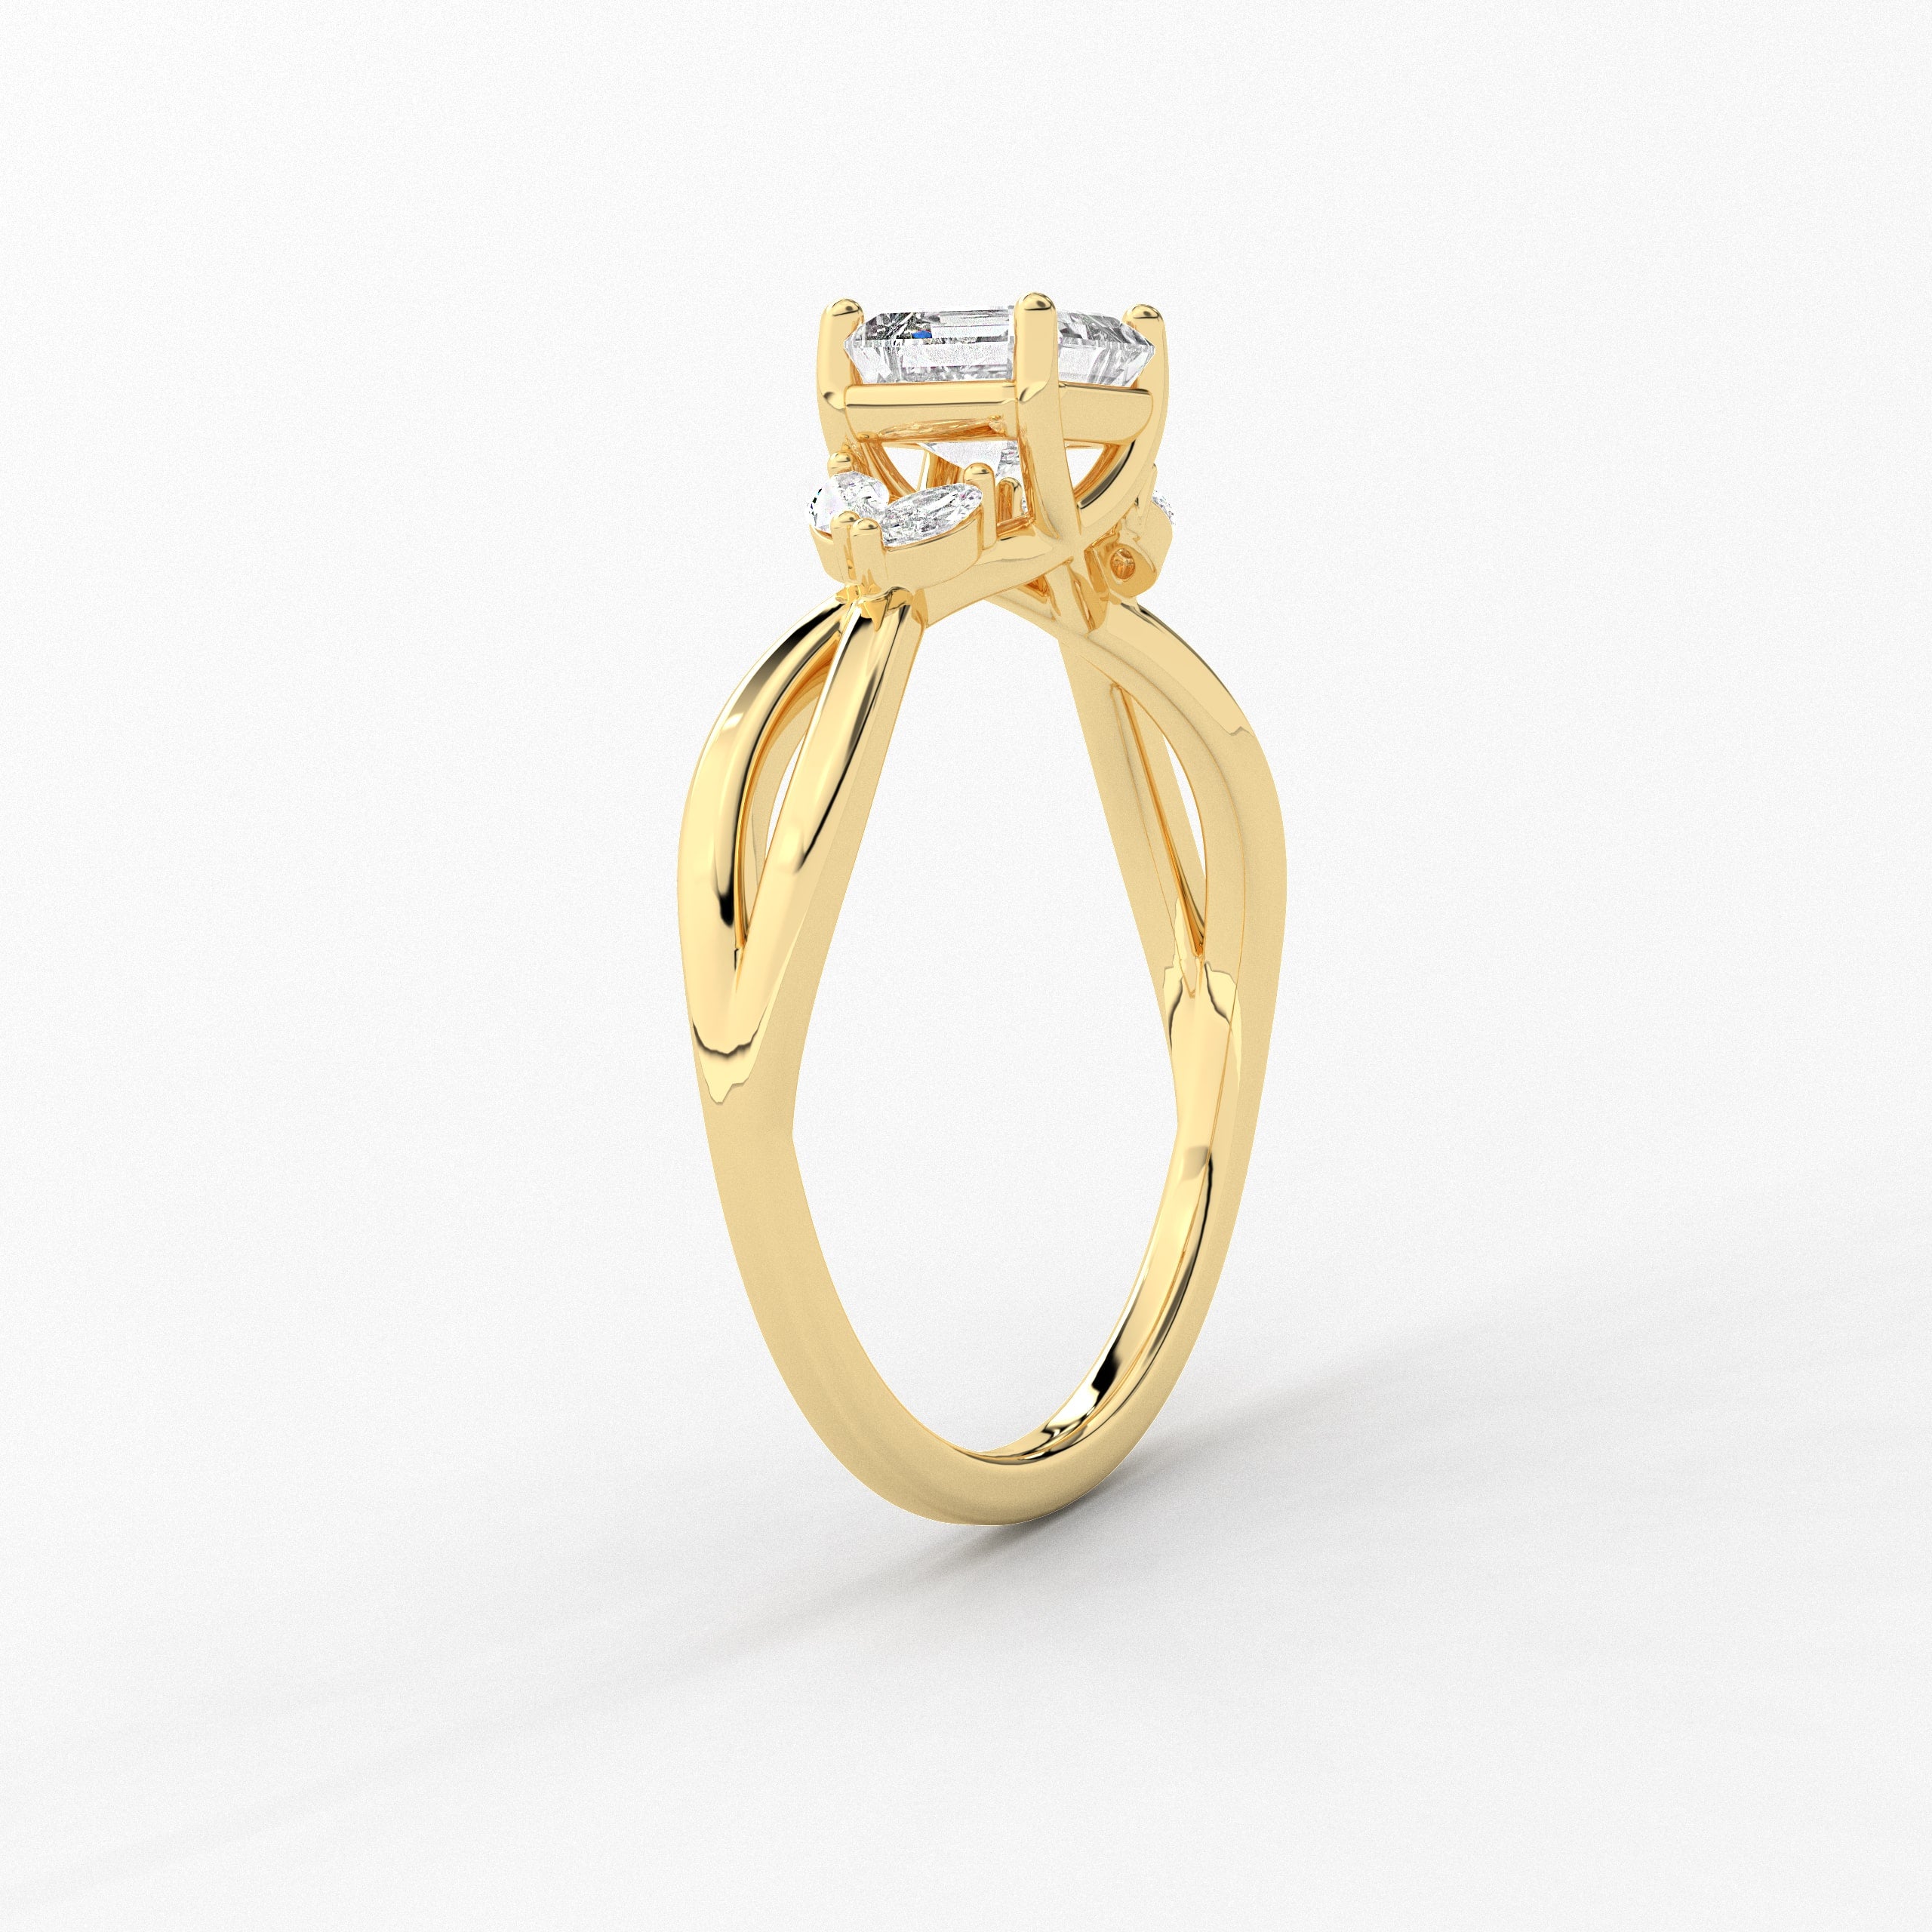 Asscher Cut Nature inspired Engagement Ring For Woman